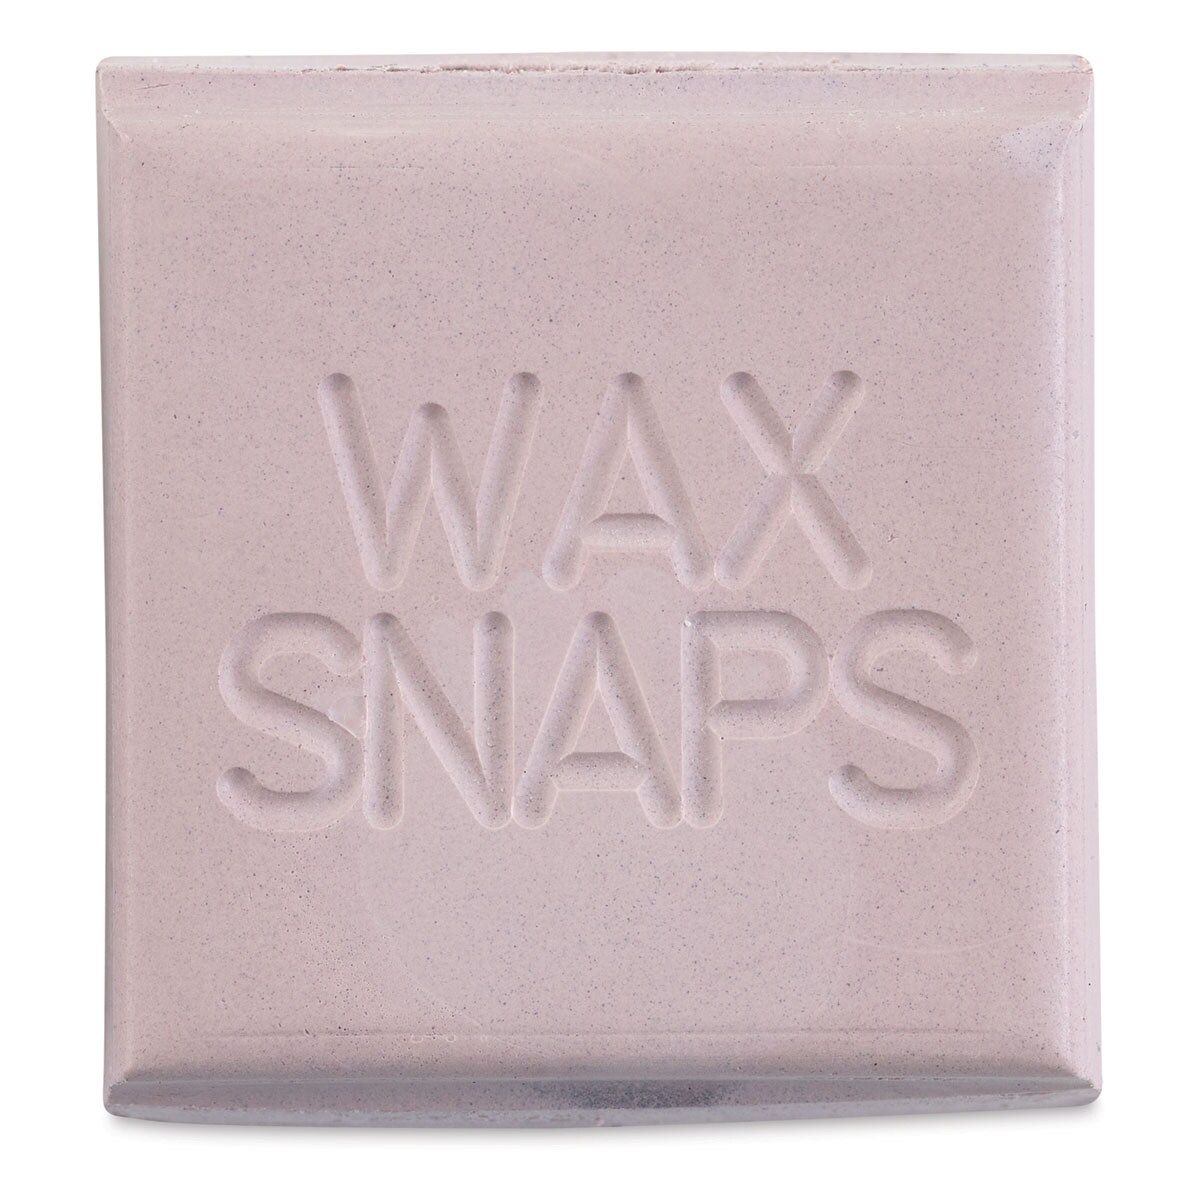 Enkaustikos Wax Snaps Encaustic Paints - Dusk, 40 ml, Cake